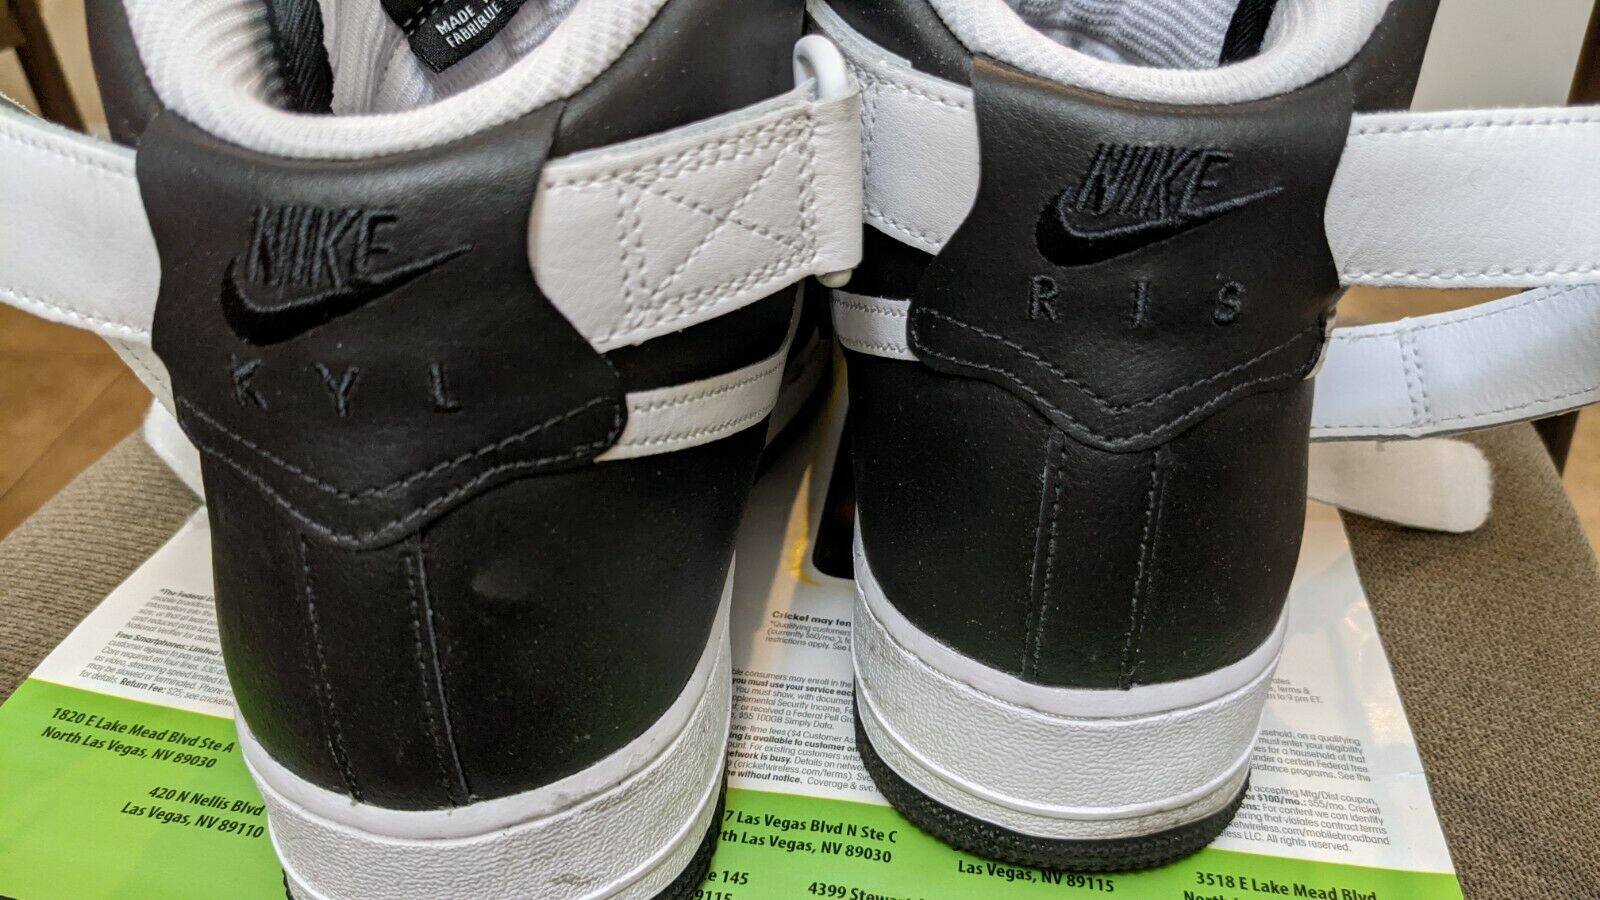 Nike similar to Kyle Reese Terminator shoes